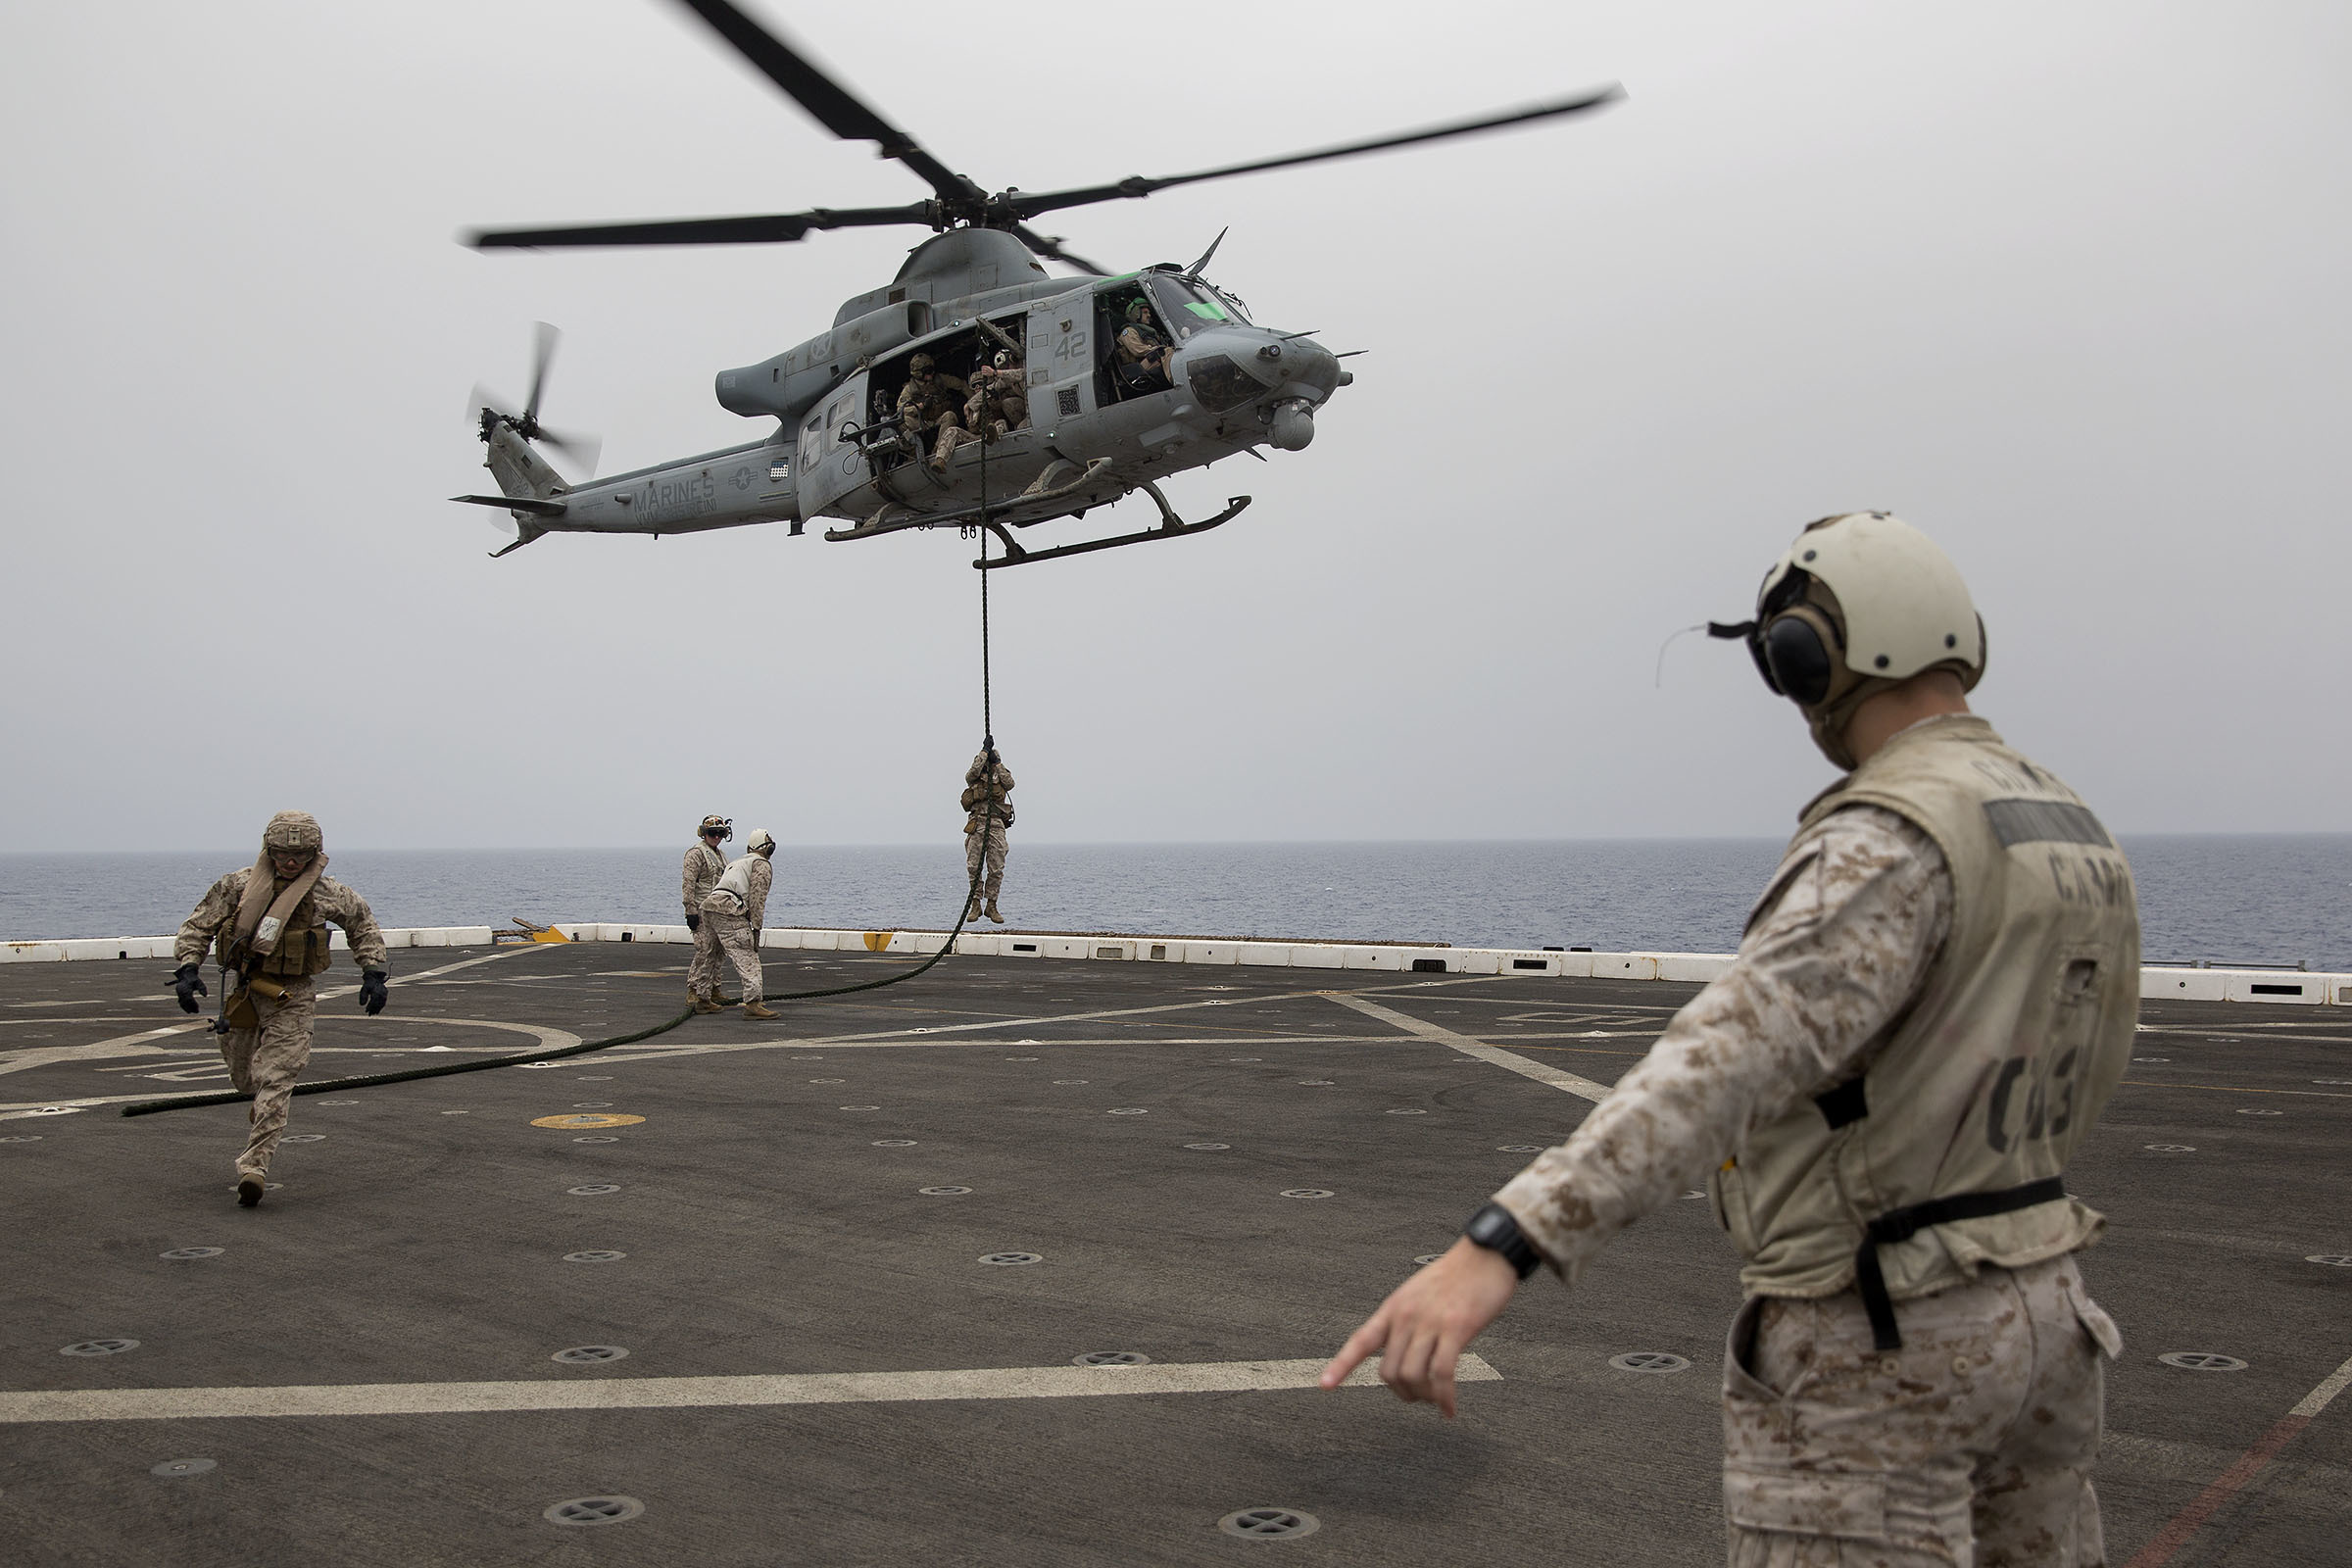 24th marine expeditionary unit landing training photo